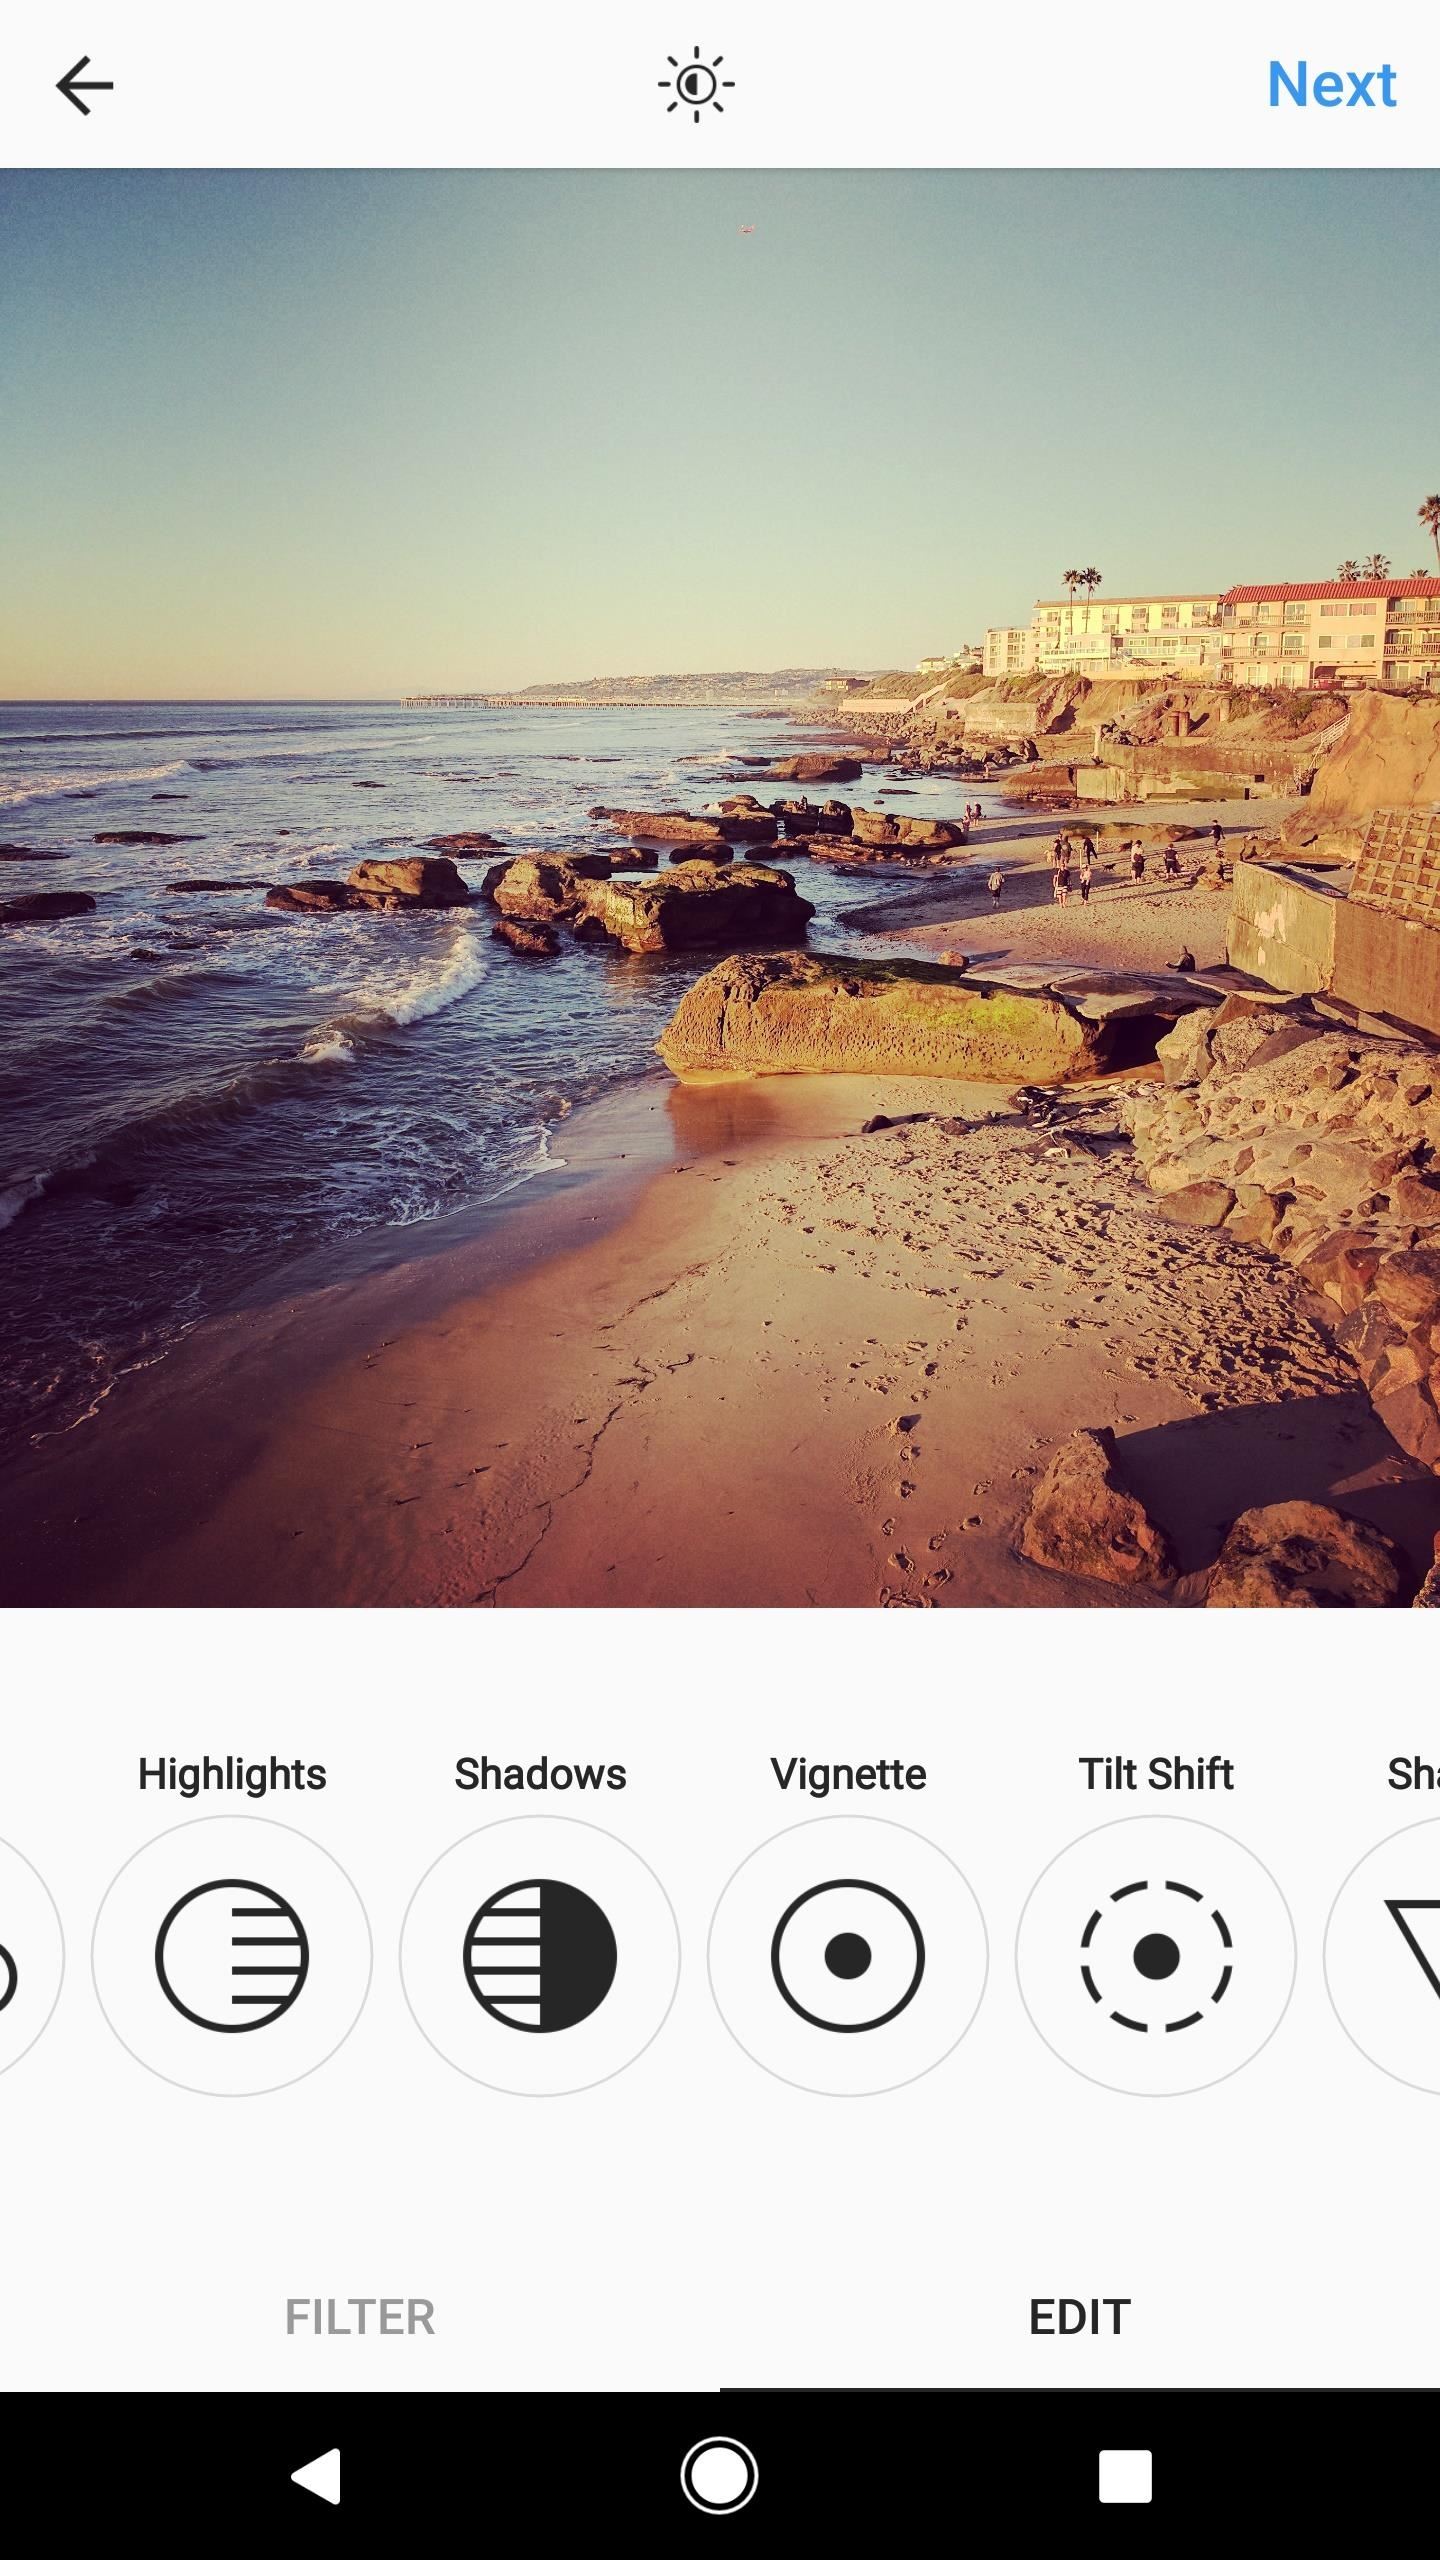 Google Docs Meets Instagram in Google's Next Social App